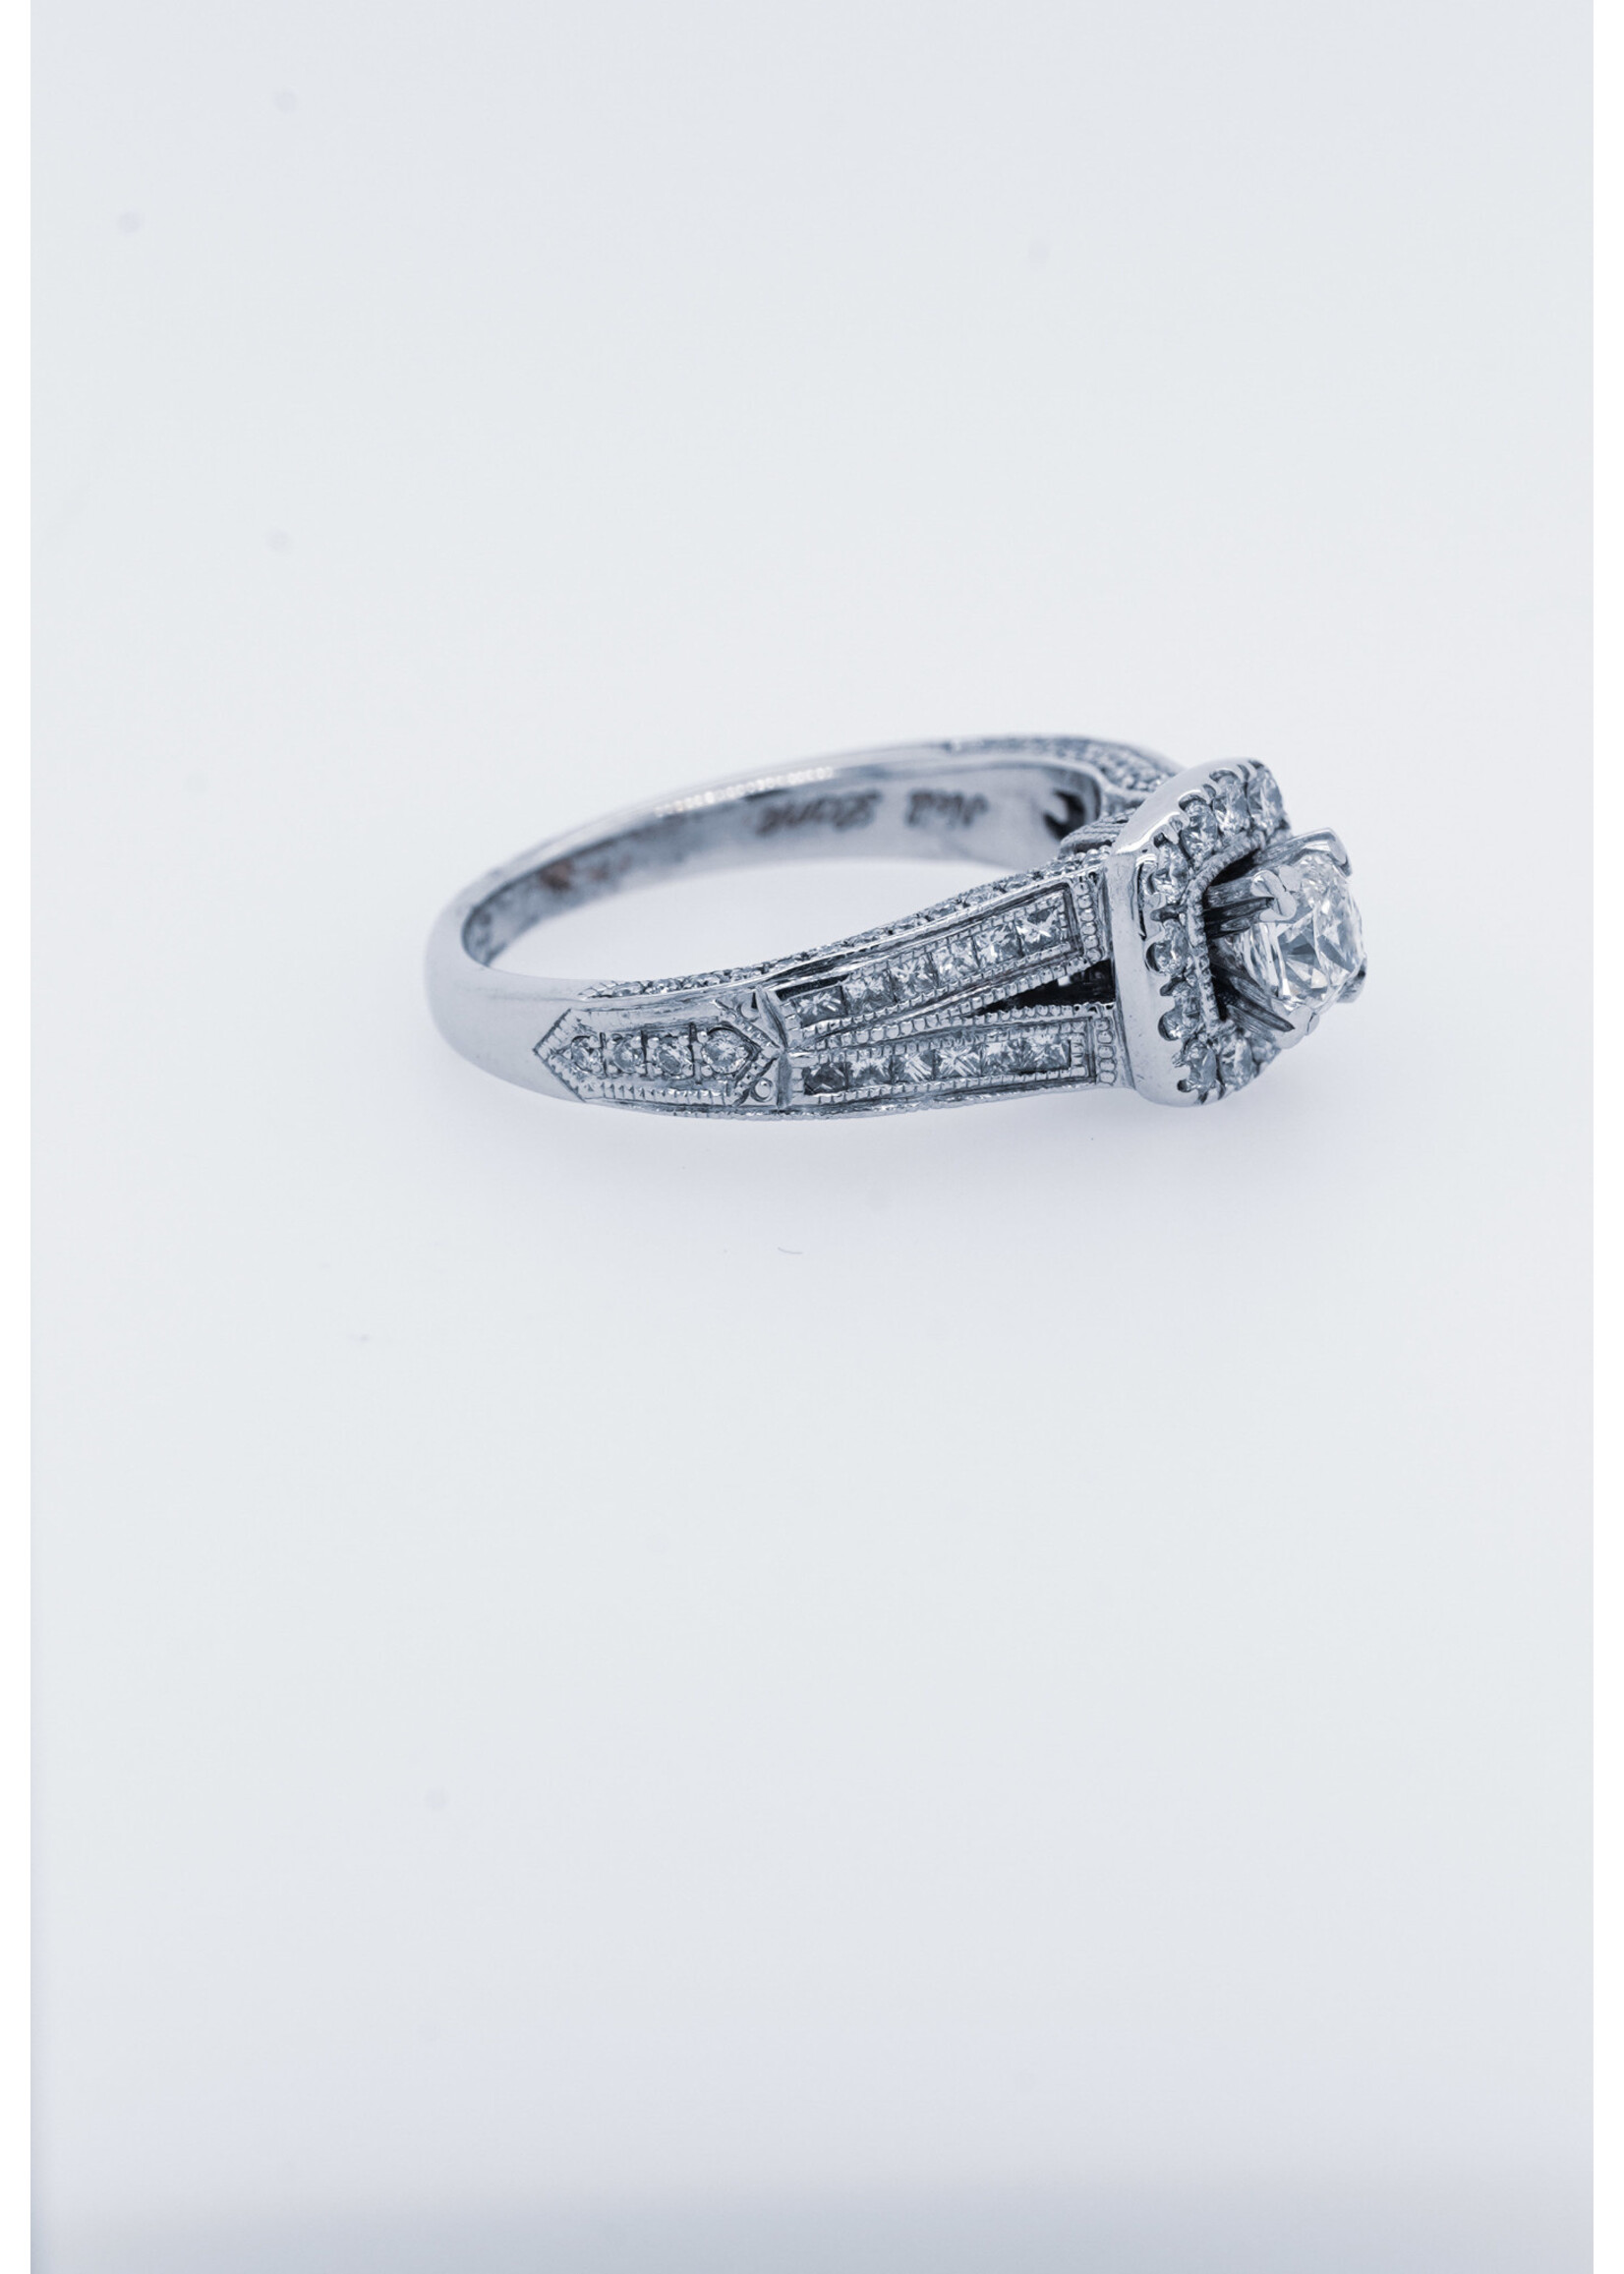 14KW 5.81g 1.40ctw (.55ctr) G/SI1 Cushion Diamond Halo Engagement Ring (size 8)